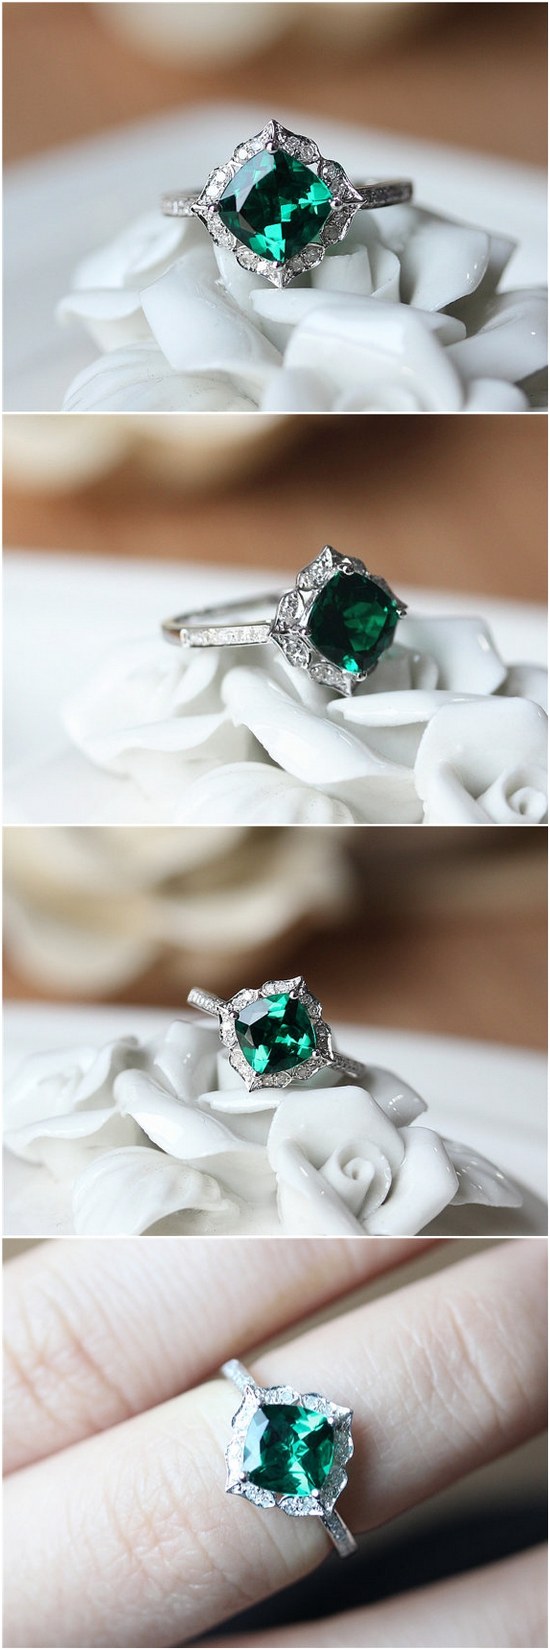 7mm Cushion Cut Emerald Engagement Ring